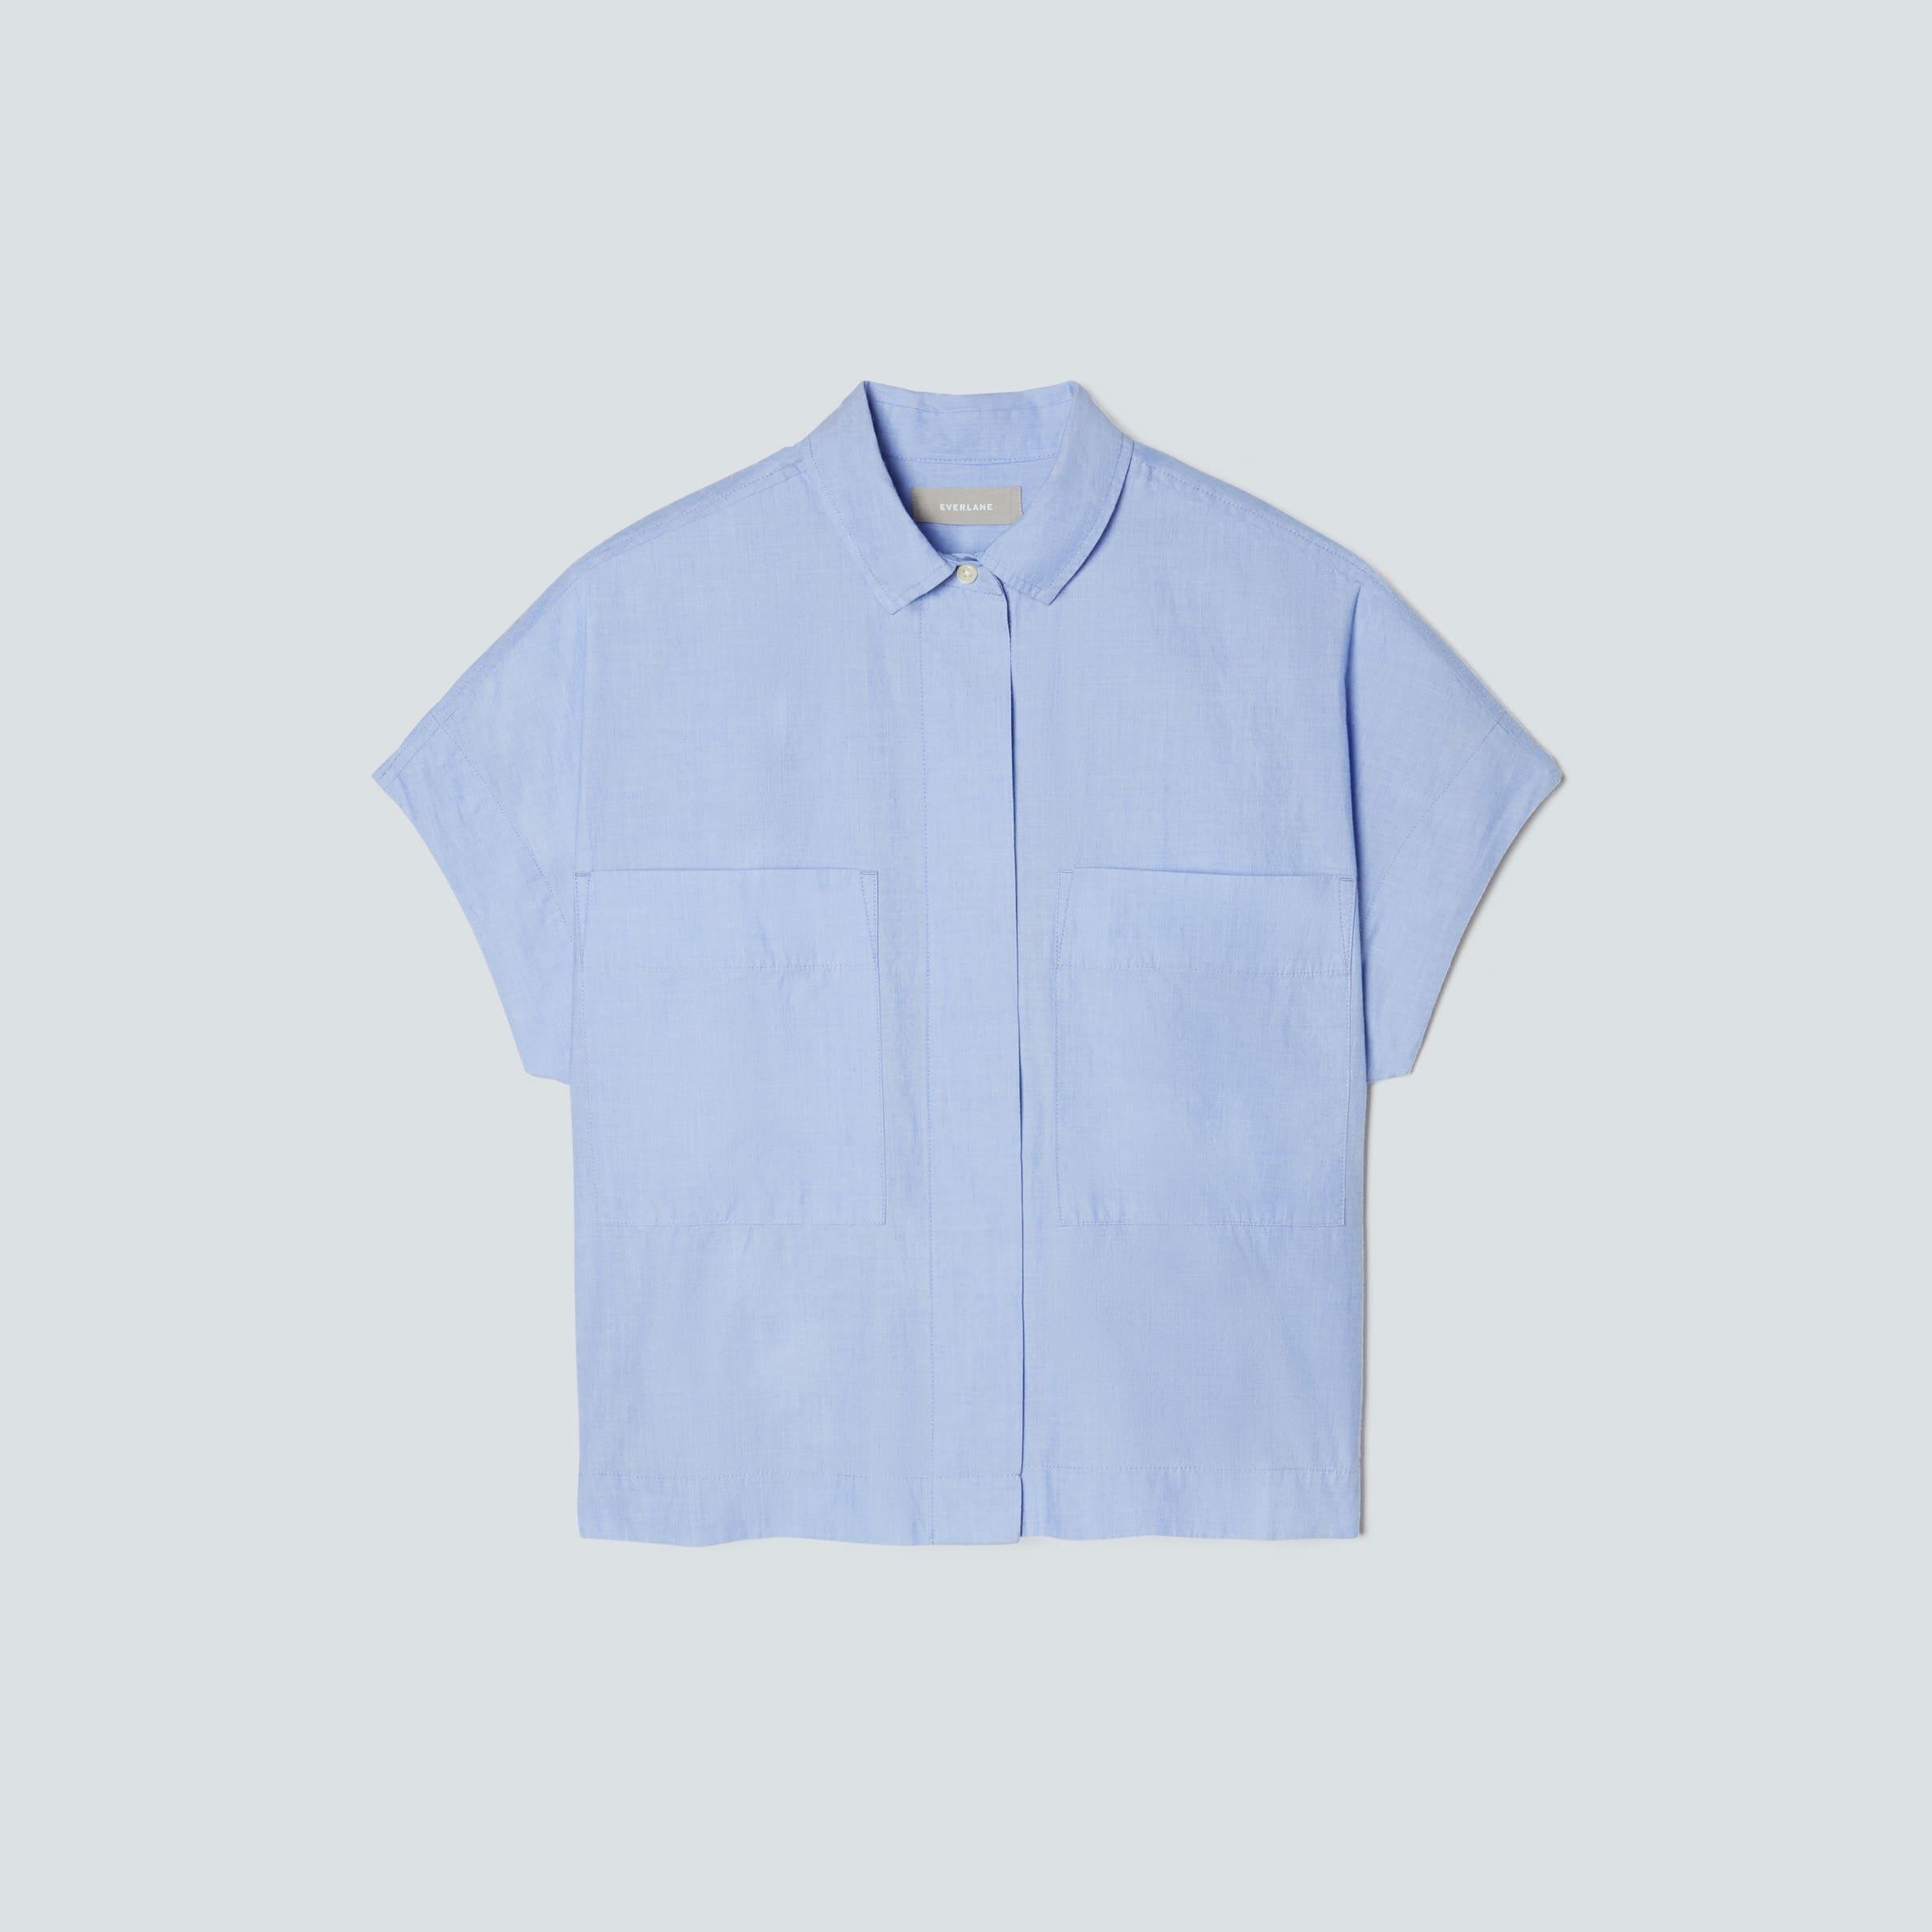 The Short-Sleeve Box Shirt by EVERLANE